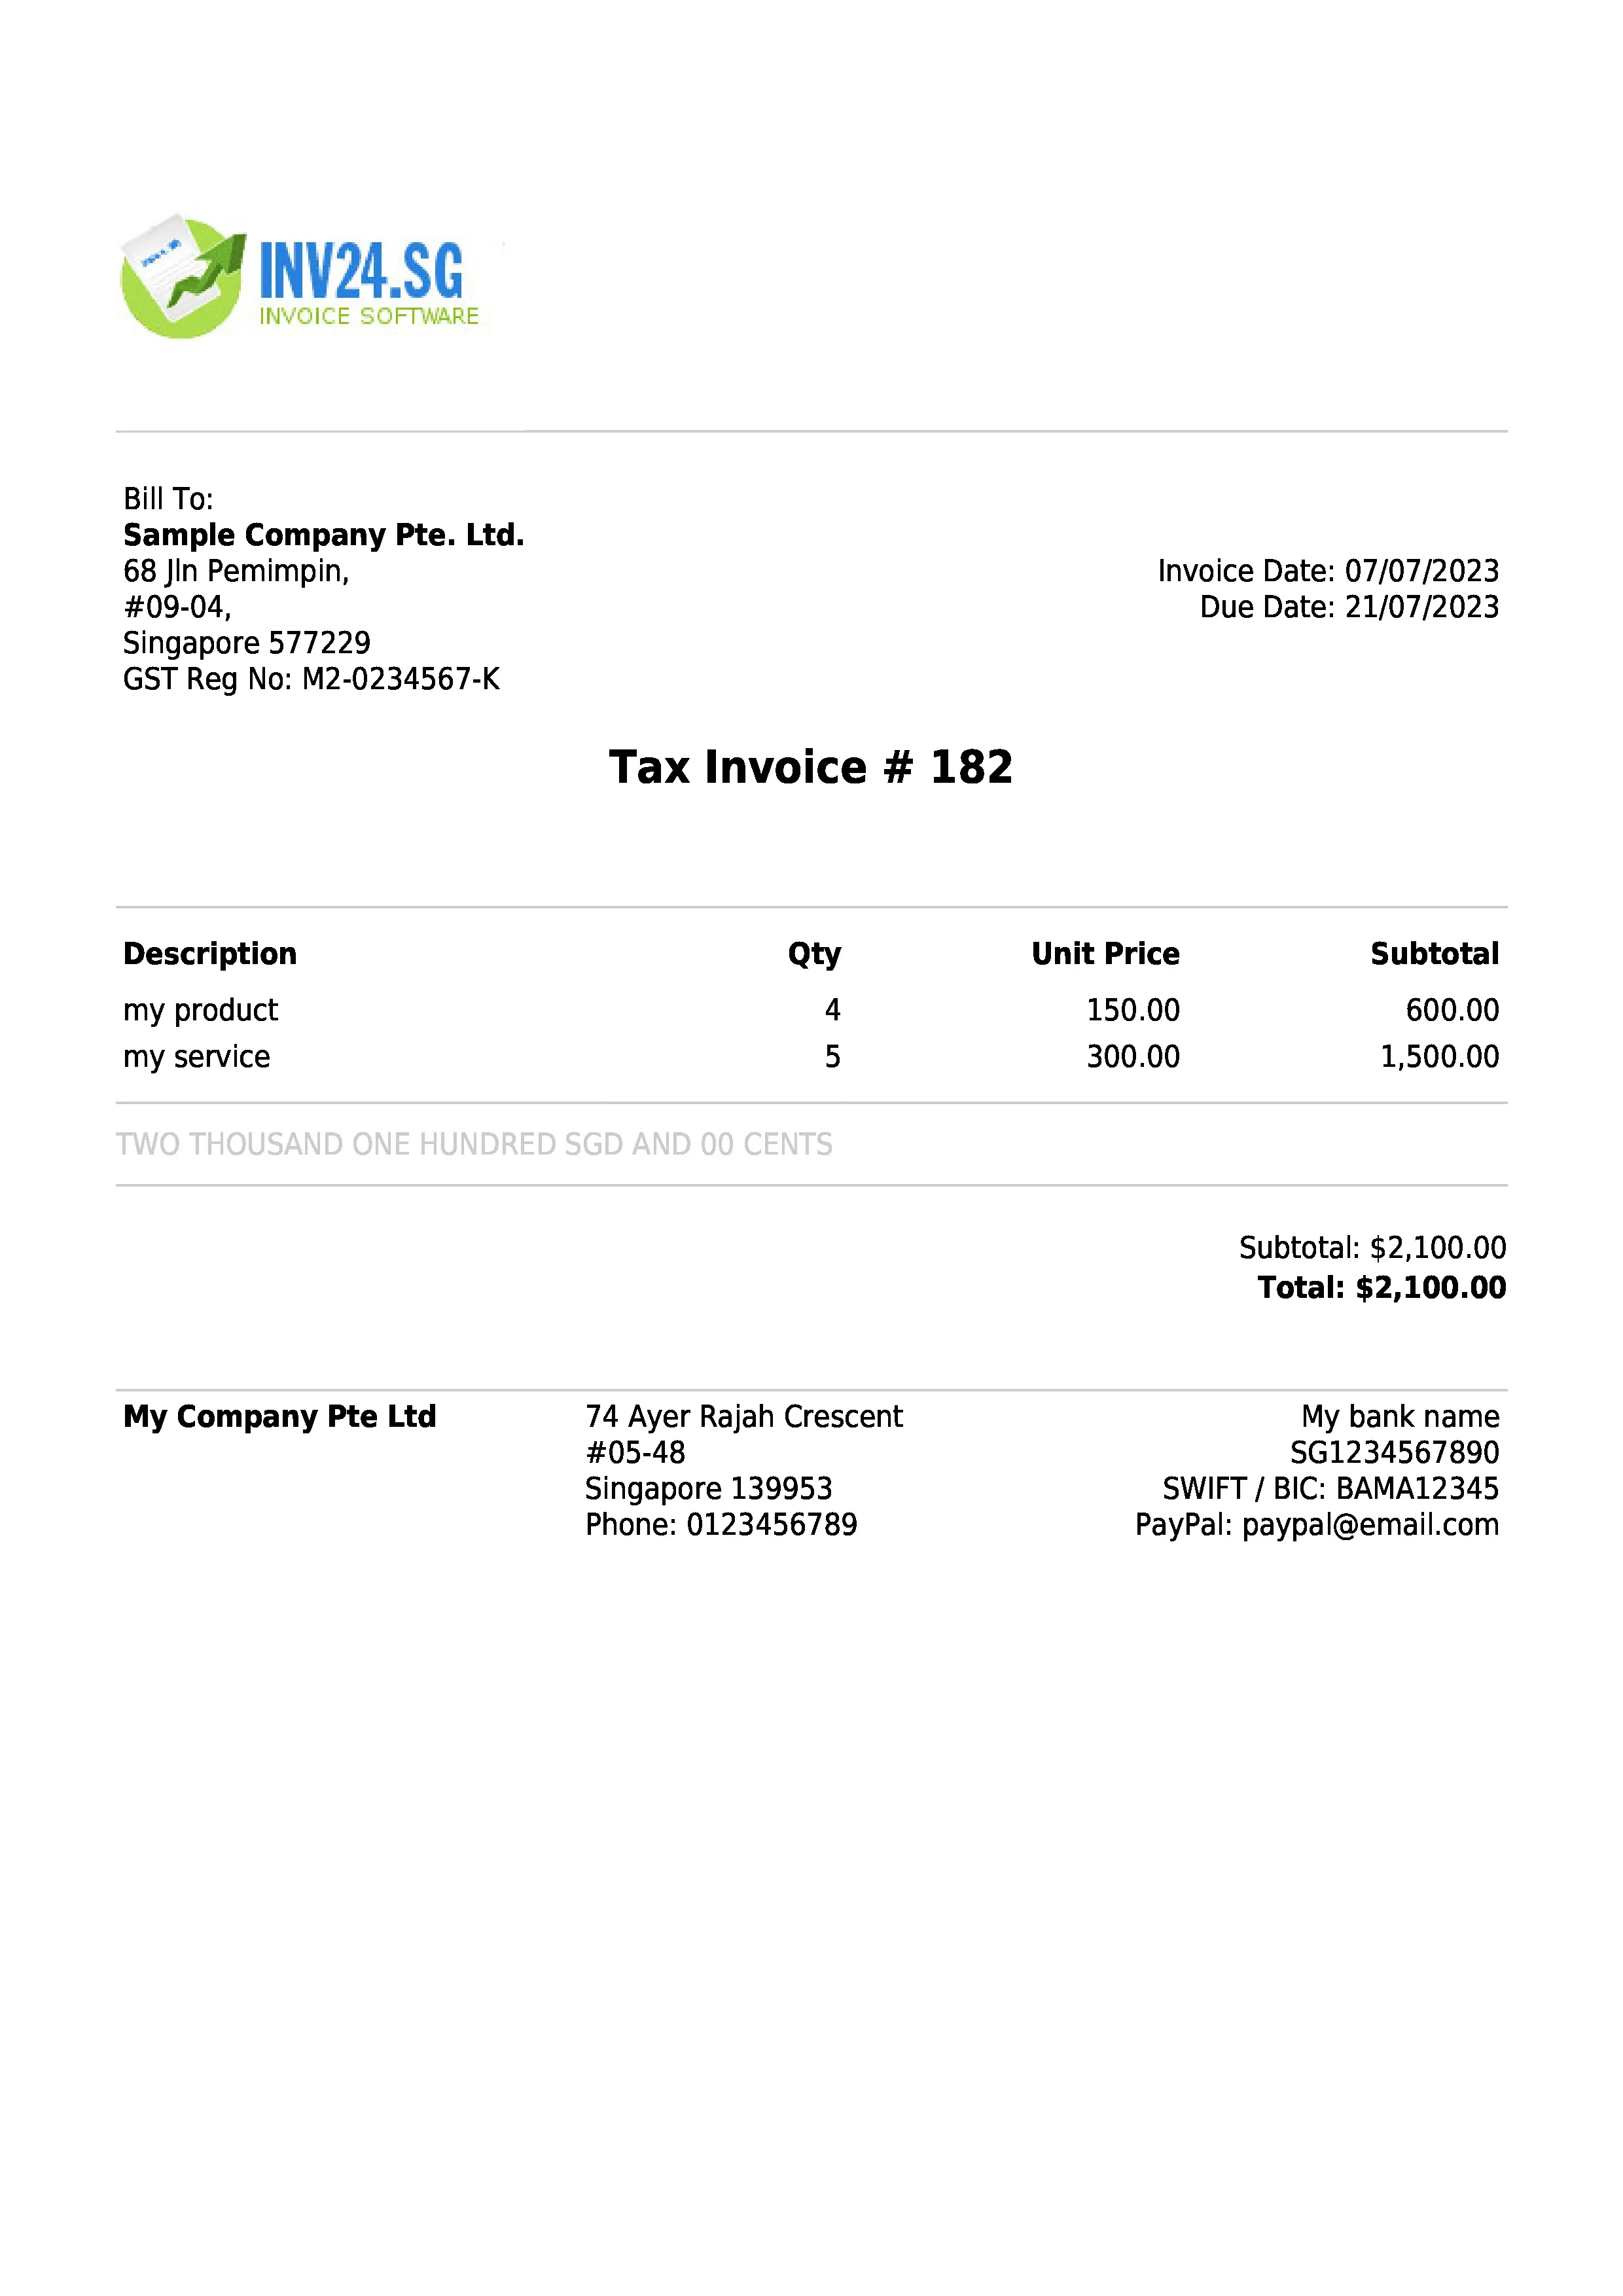 Singapore invoice sample for GST non-payer company